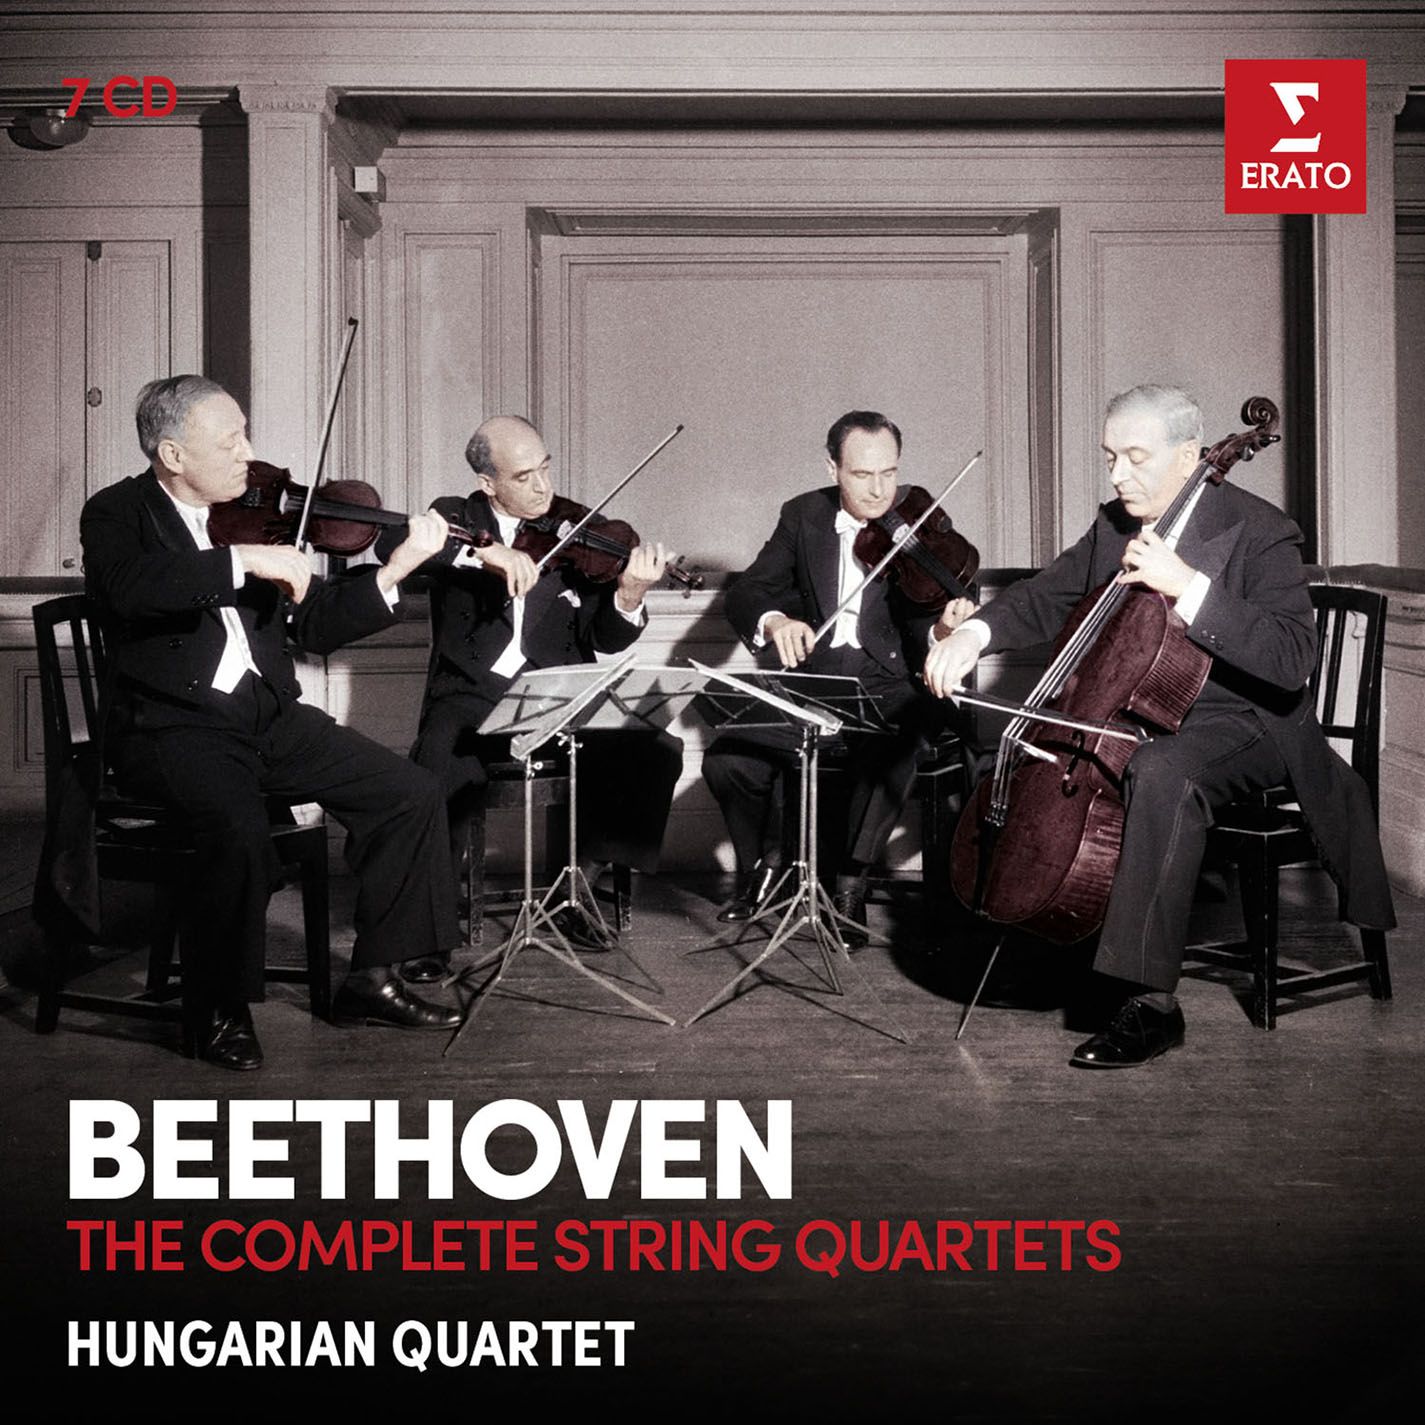 Hungarian Quartet - Beethoven: Complete String Quartets (1955/2017) [HDTracks FLAC 24bit/96kHz]